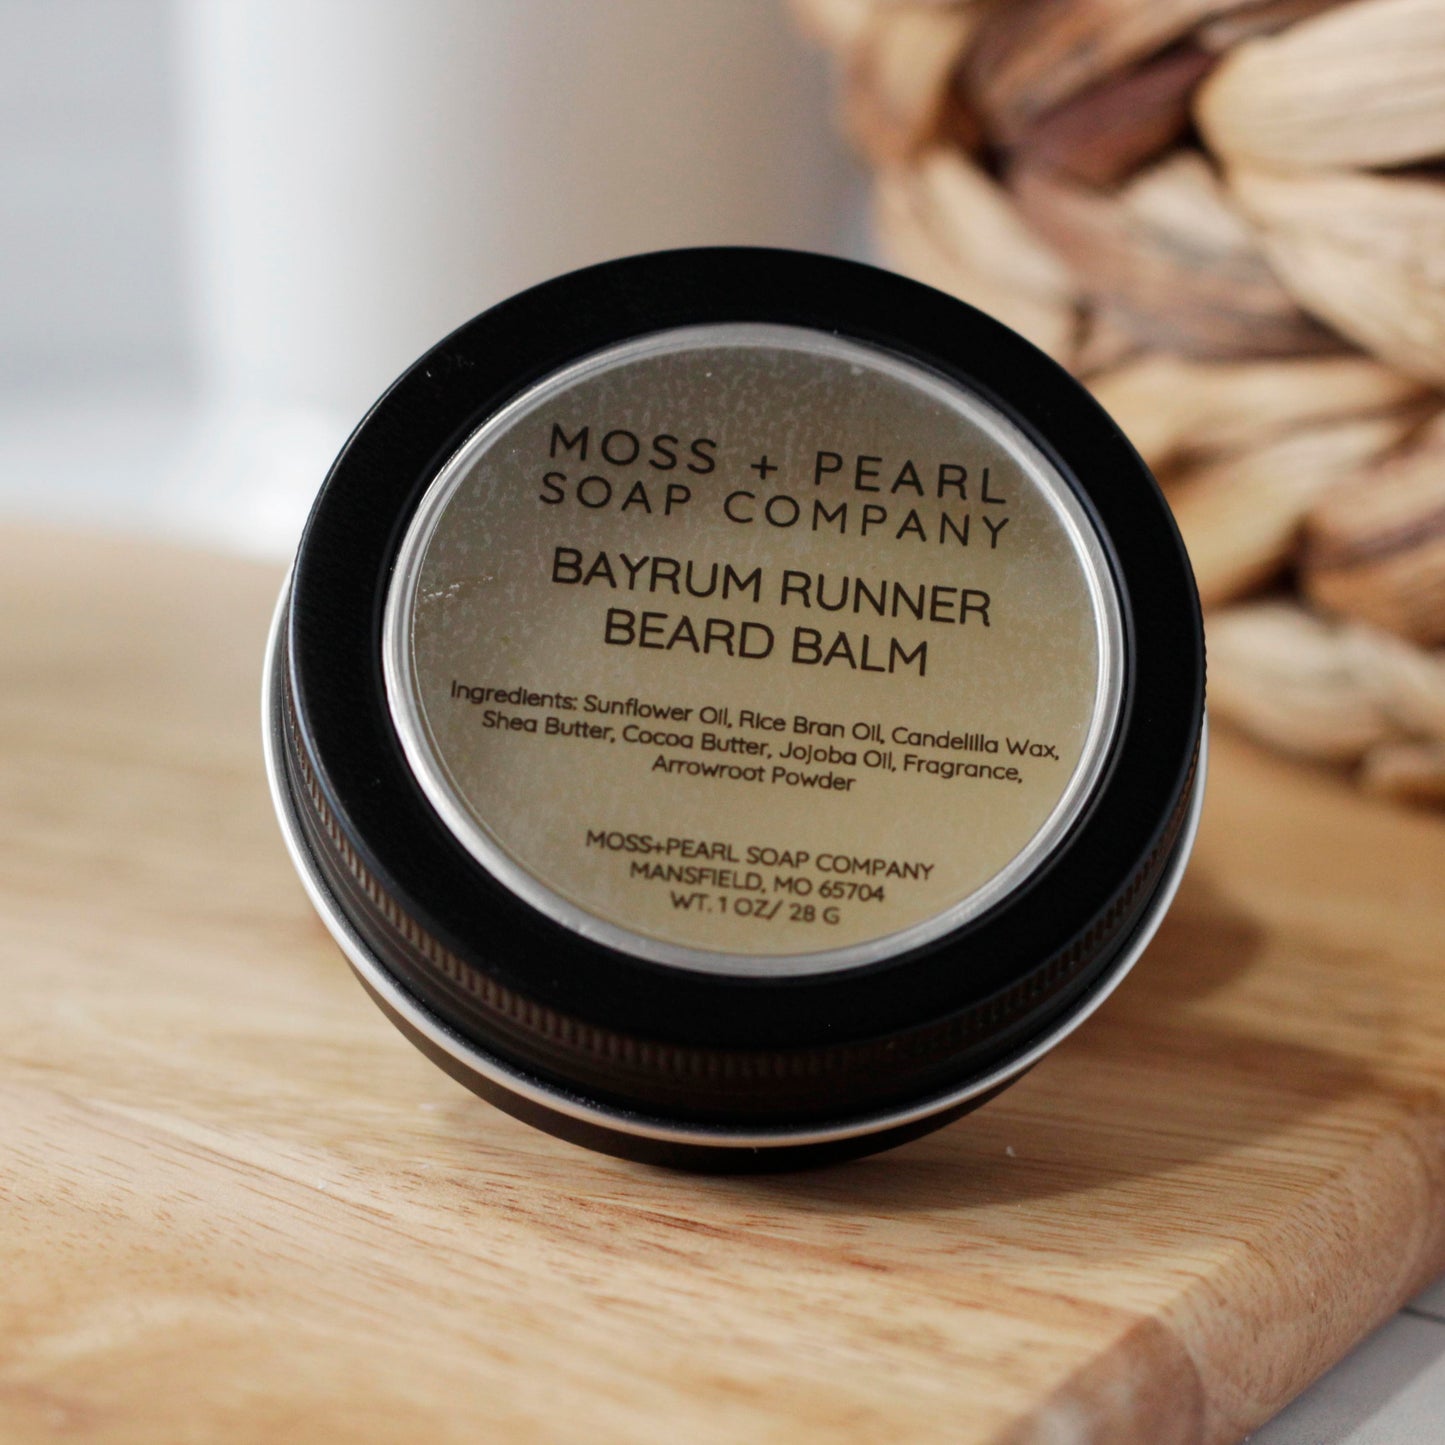 BAYRUM RUNNER BEARD BALM Moss + Pearl Soap Company